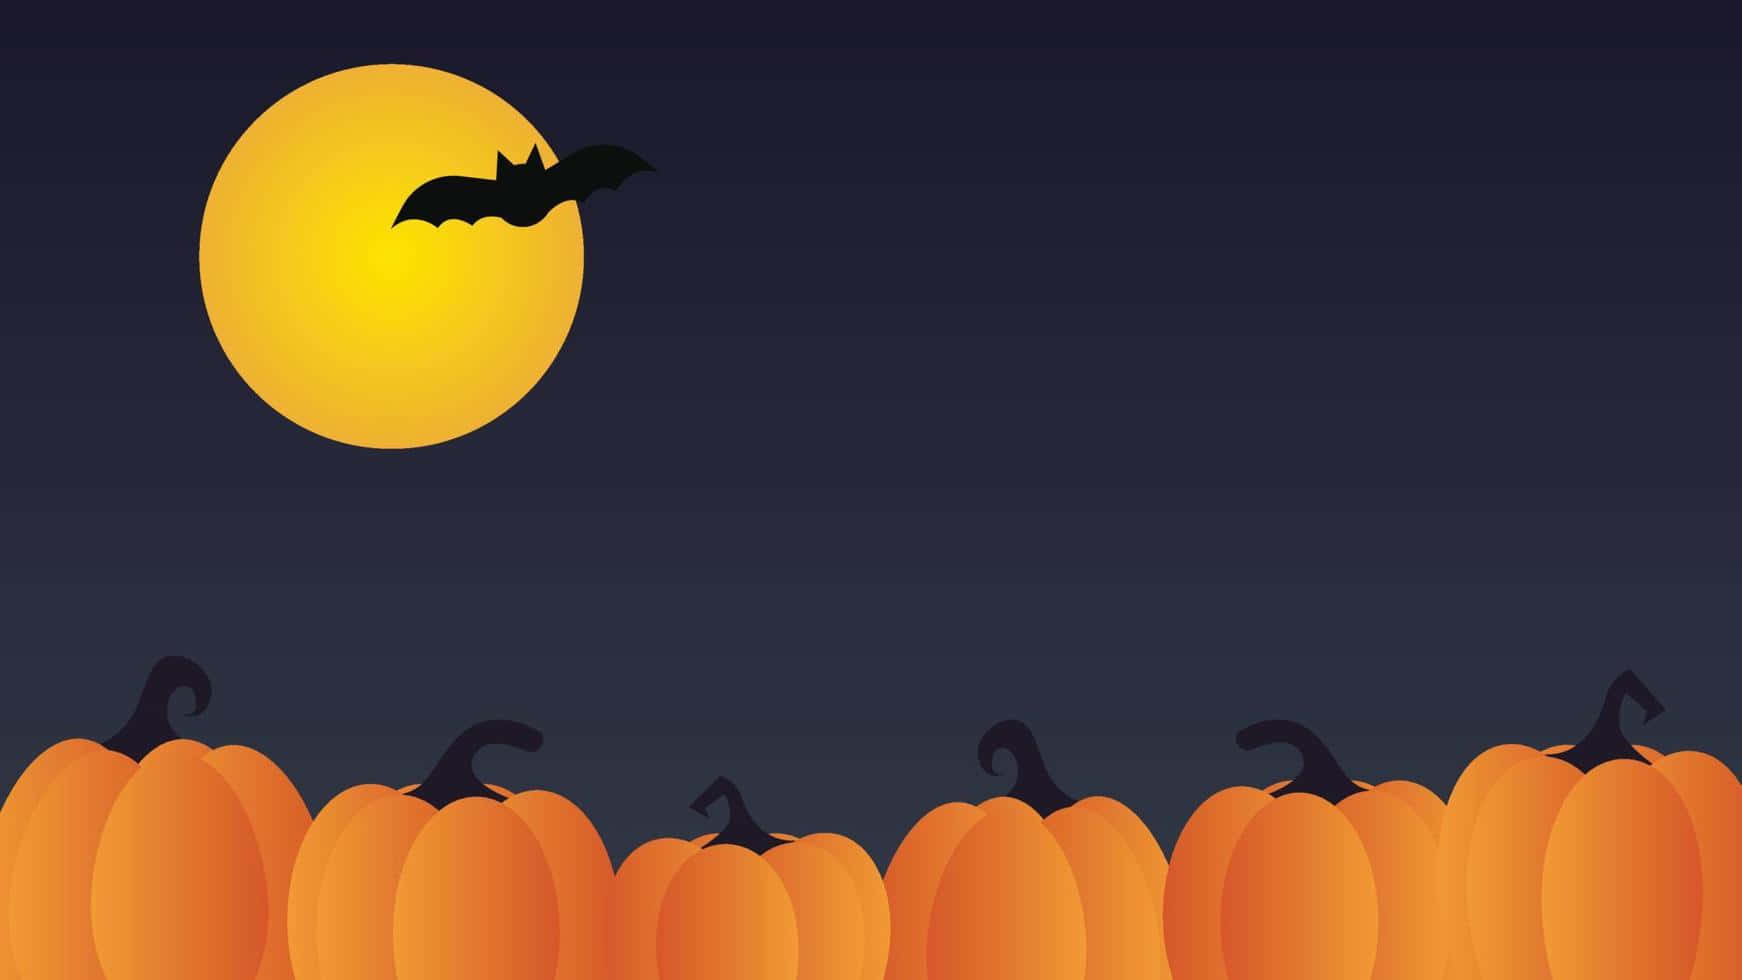 Bat Flying Over Pumpkins Aesthetic Creepy Halloween Background